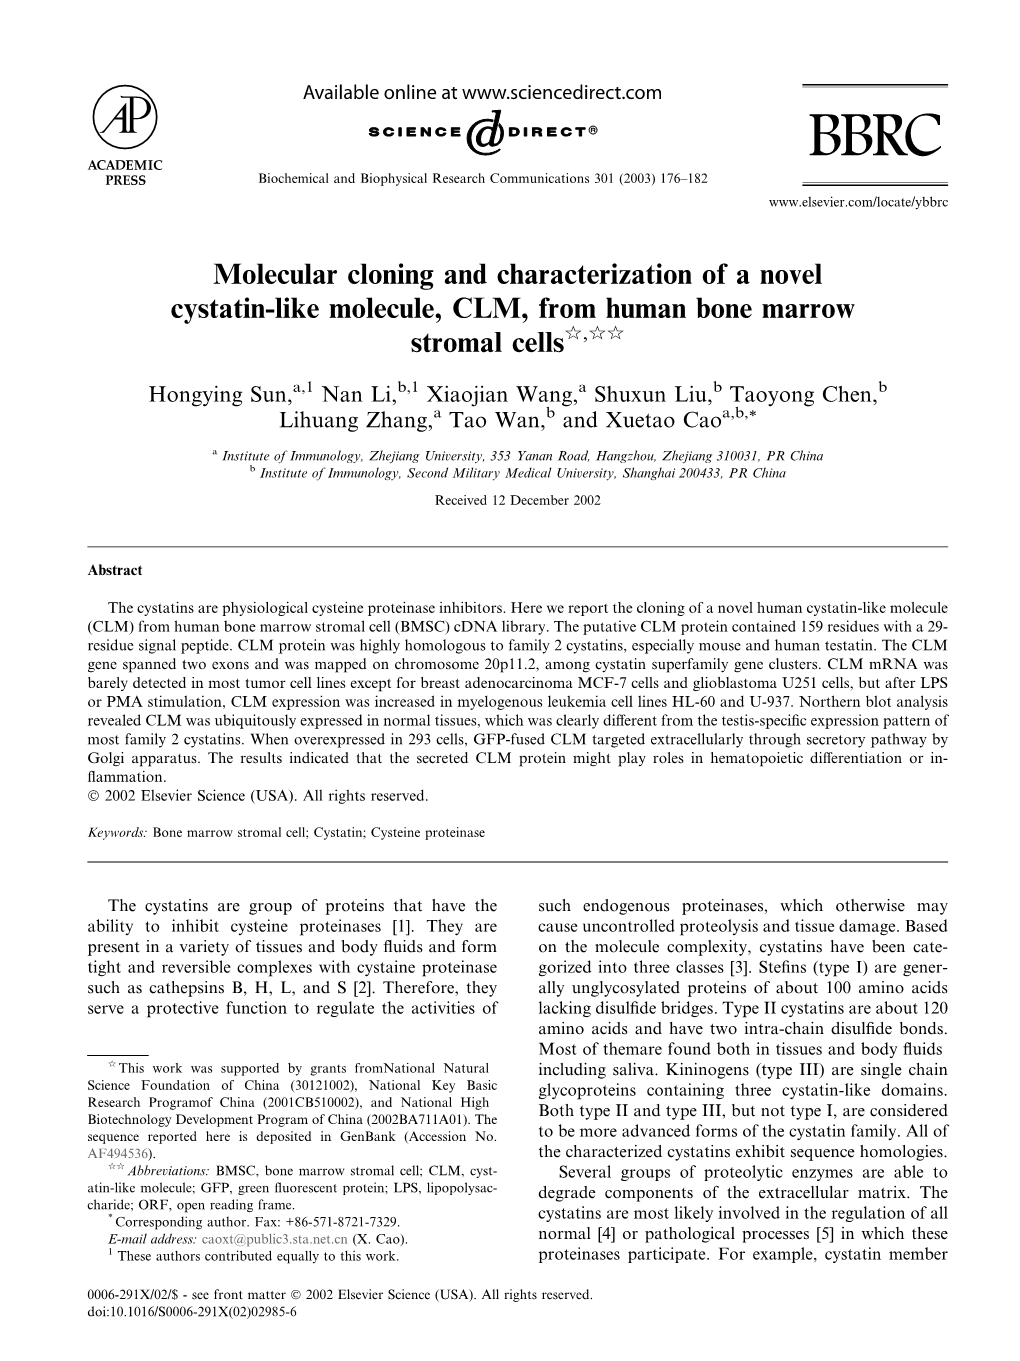 Molecular Cloning and Characterization of a Novel Cystatin-Like Molecule, CLM, from Human Bone Marrow Stromal Cellsq,Qq